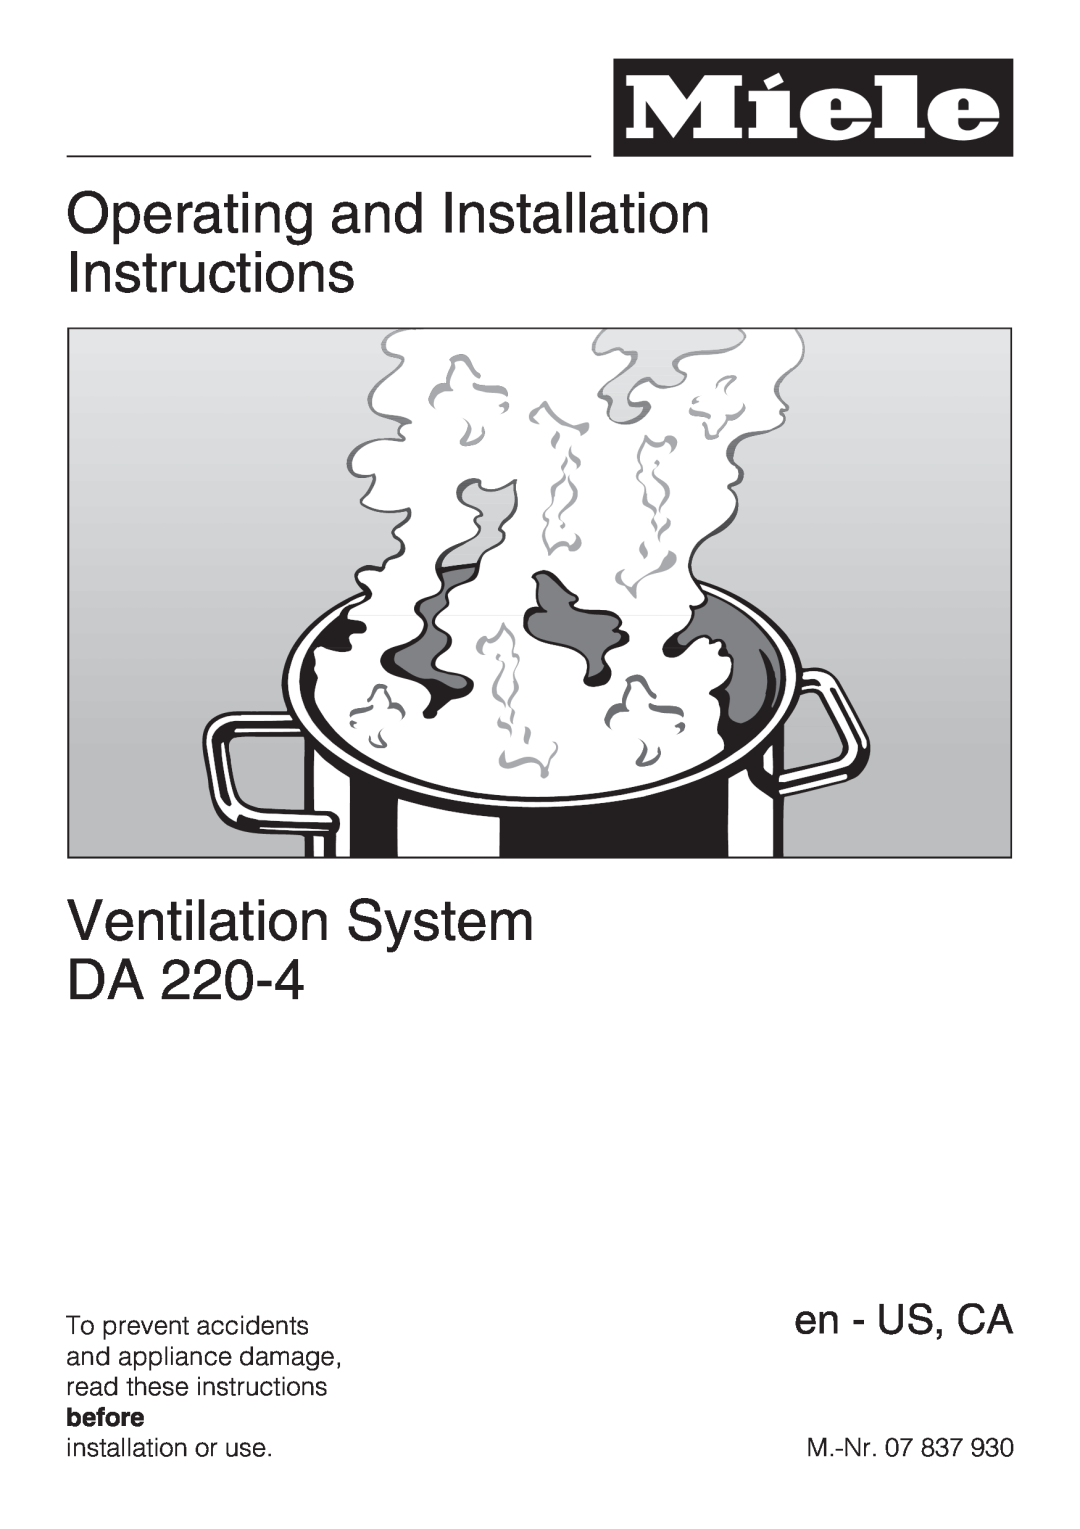 Miele DA 220-4 installation instructions Operating and Installation Instructions, Ventilation System DA, en - US, CA 